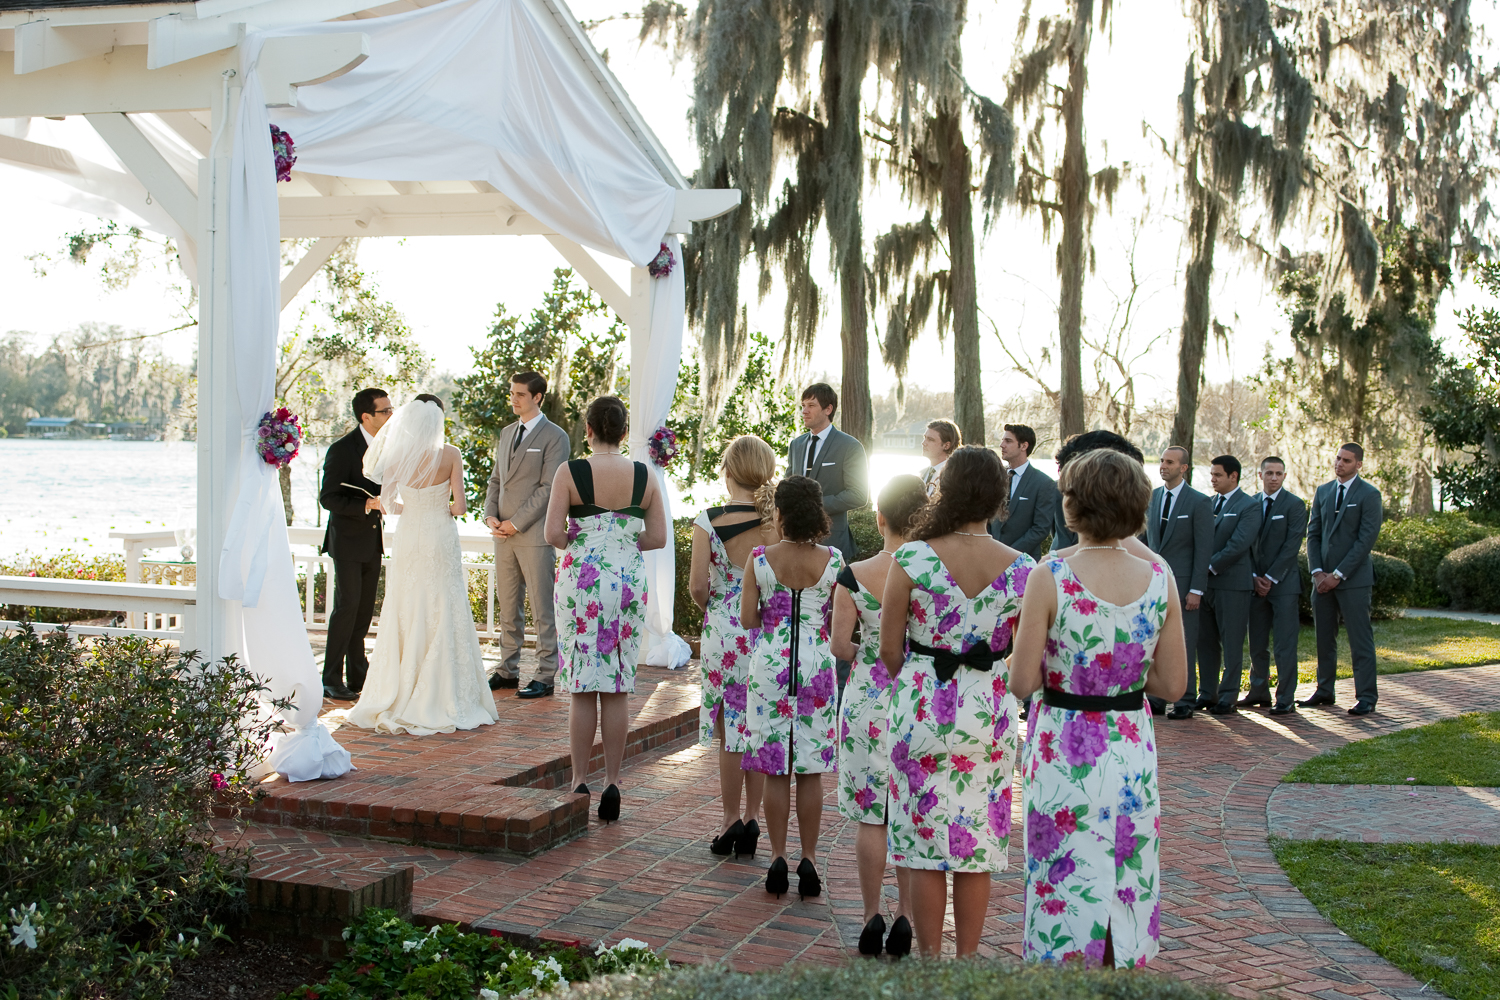  Project Runway Jesse Lenoir wedding, Orlando, Florida
 